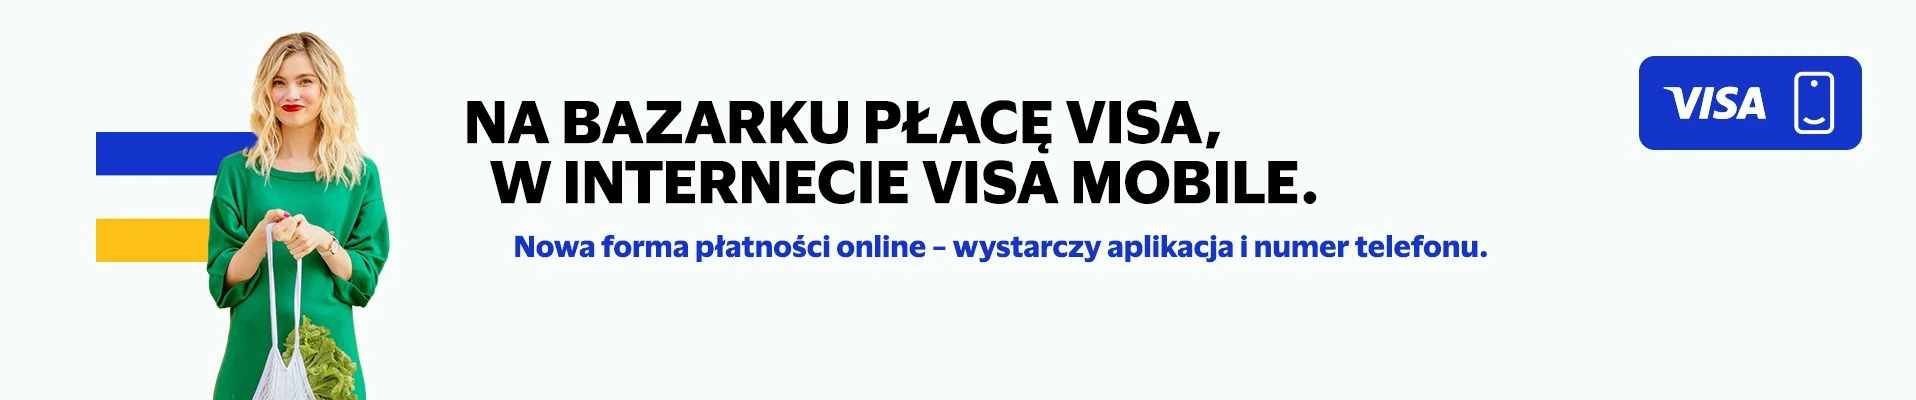 visa mobile bps banner 1920x400 v2 40a17a55